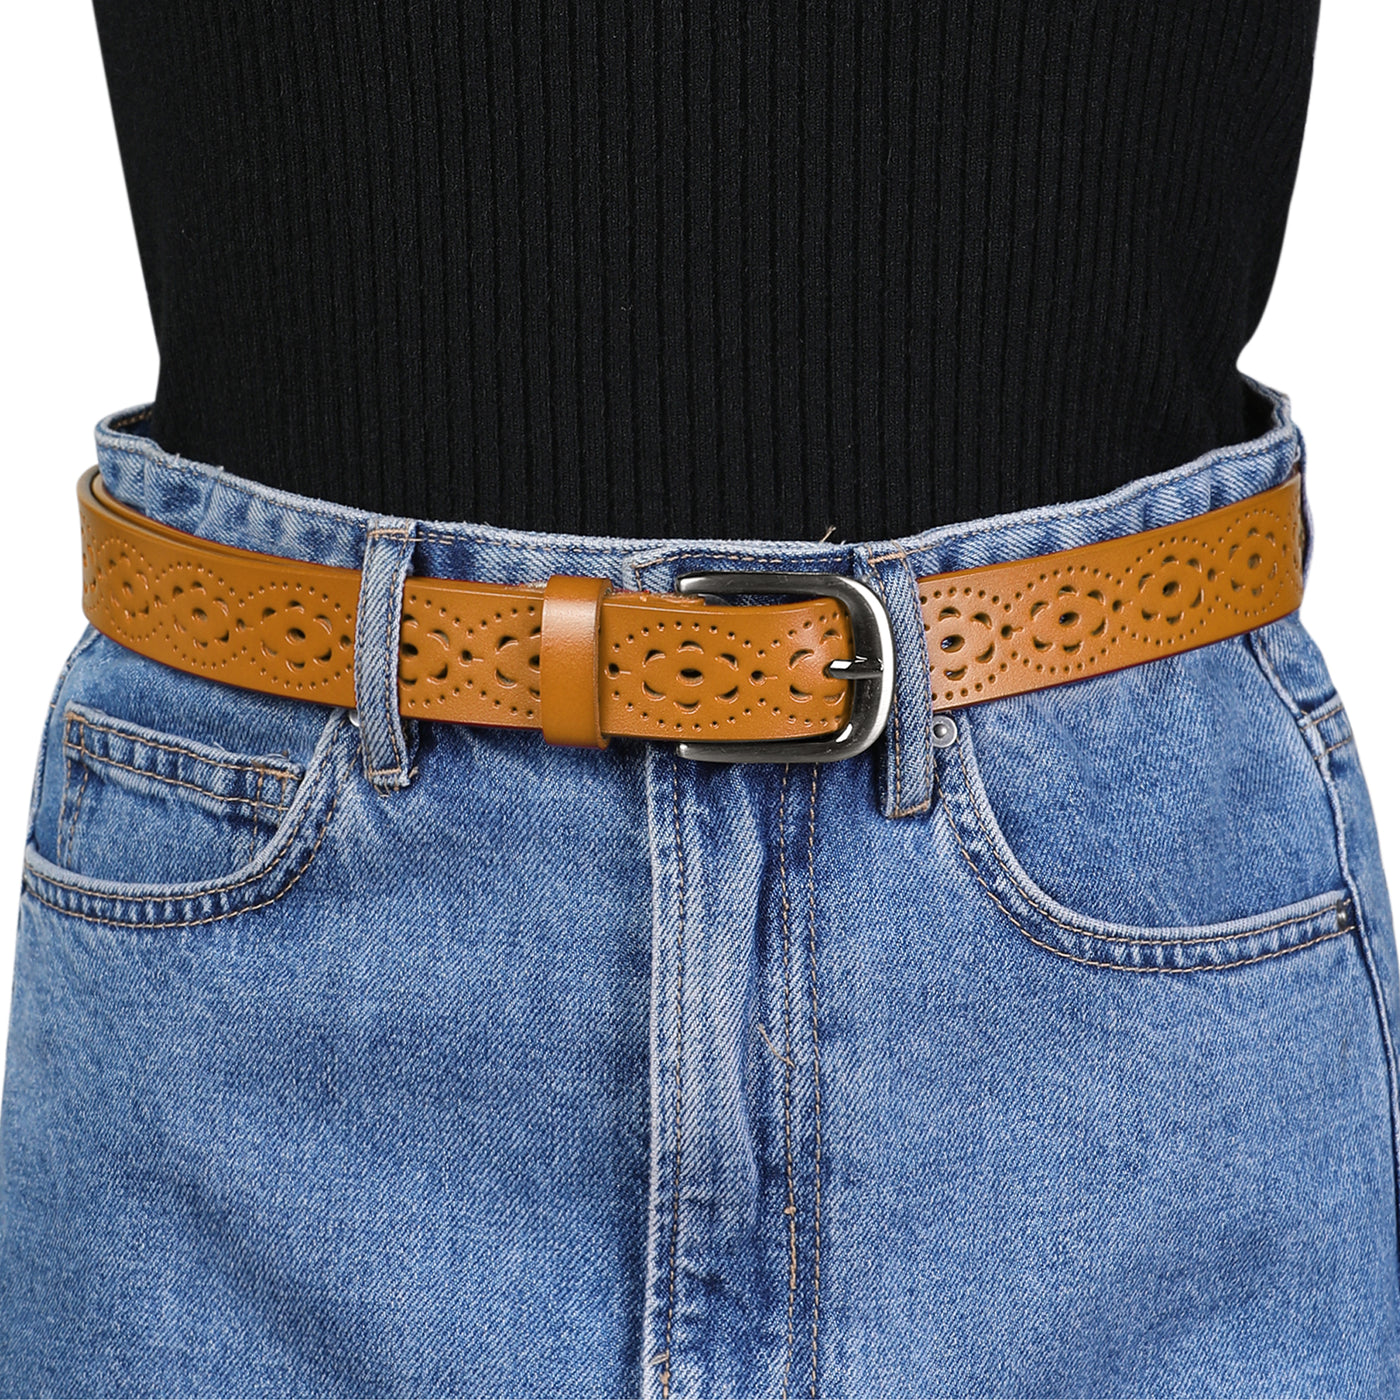 Allegra K Womens Vintage Hollow Belts Pin Buckle Faux Leather Belts for Jeans Pants